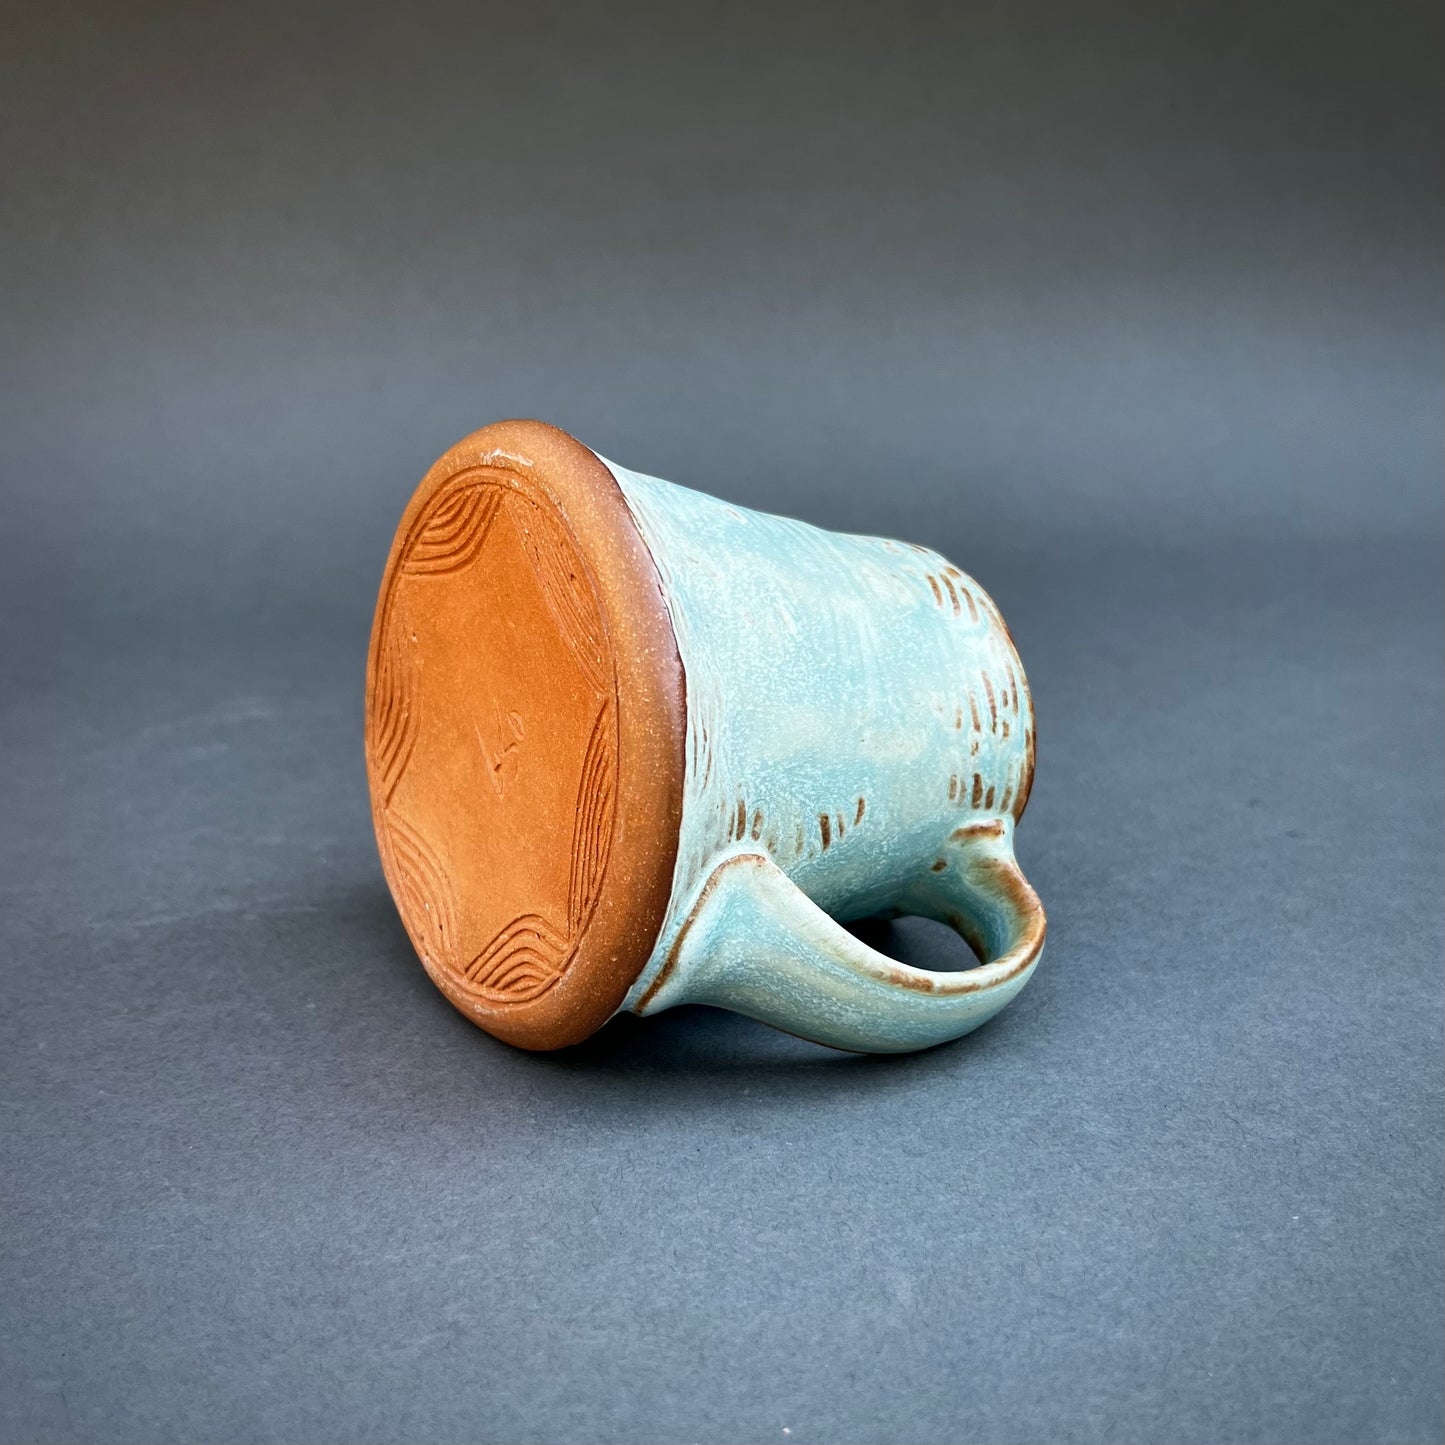 Stamped Copper Mug